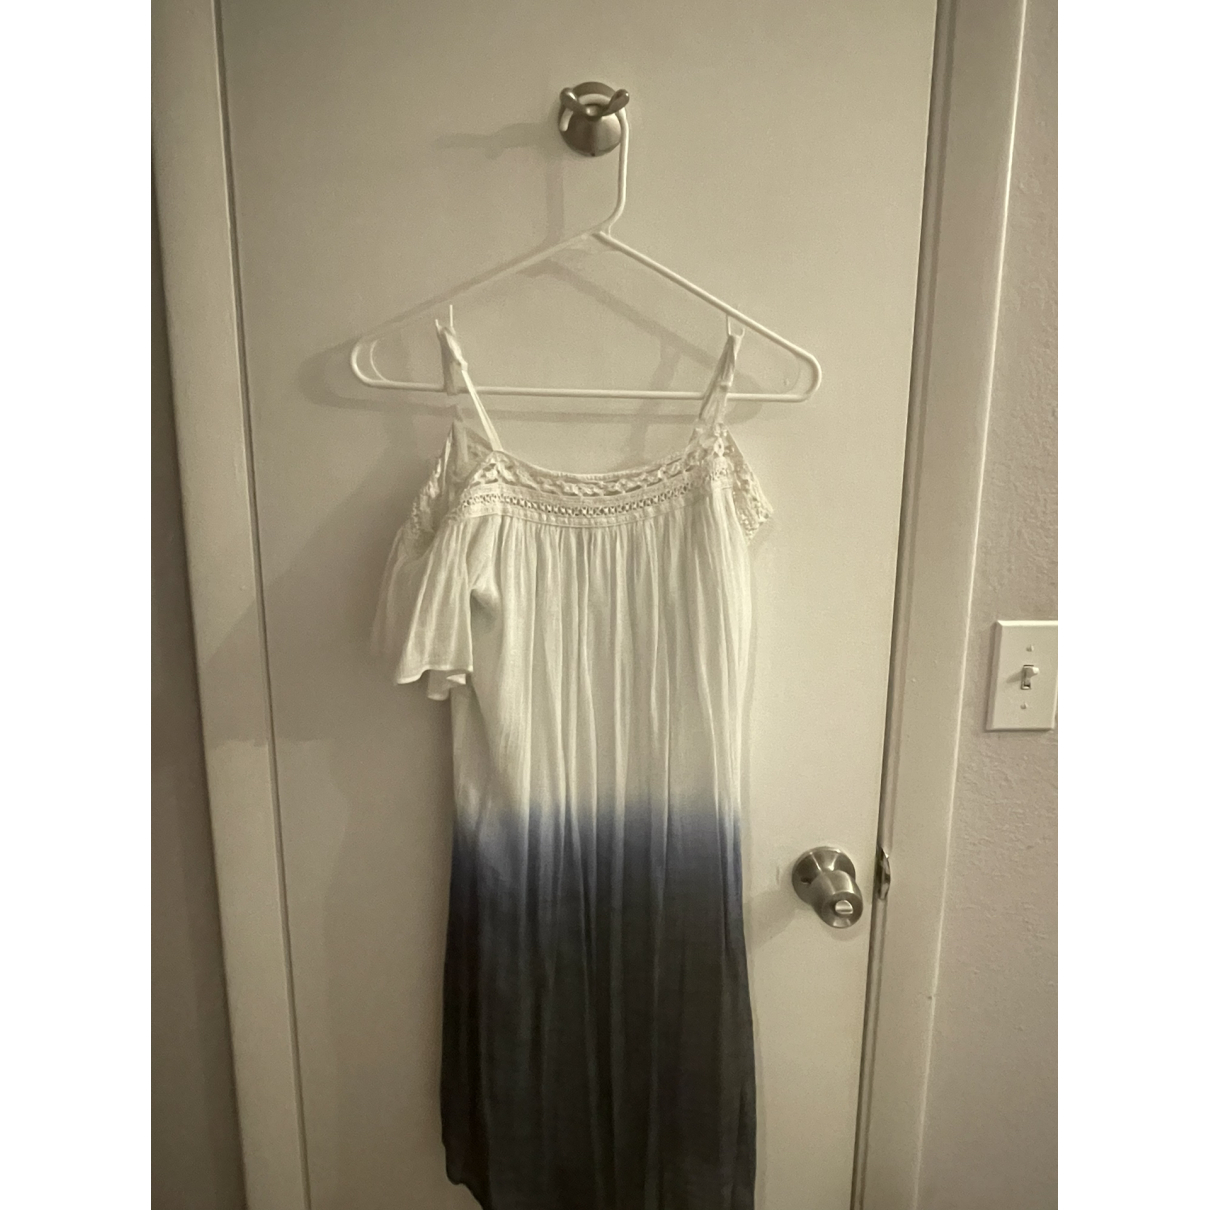 Blue Mid-length Dress